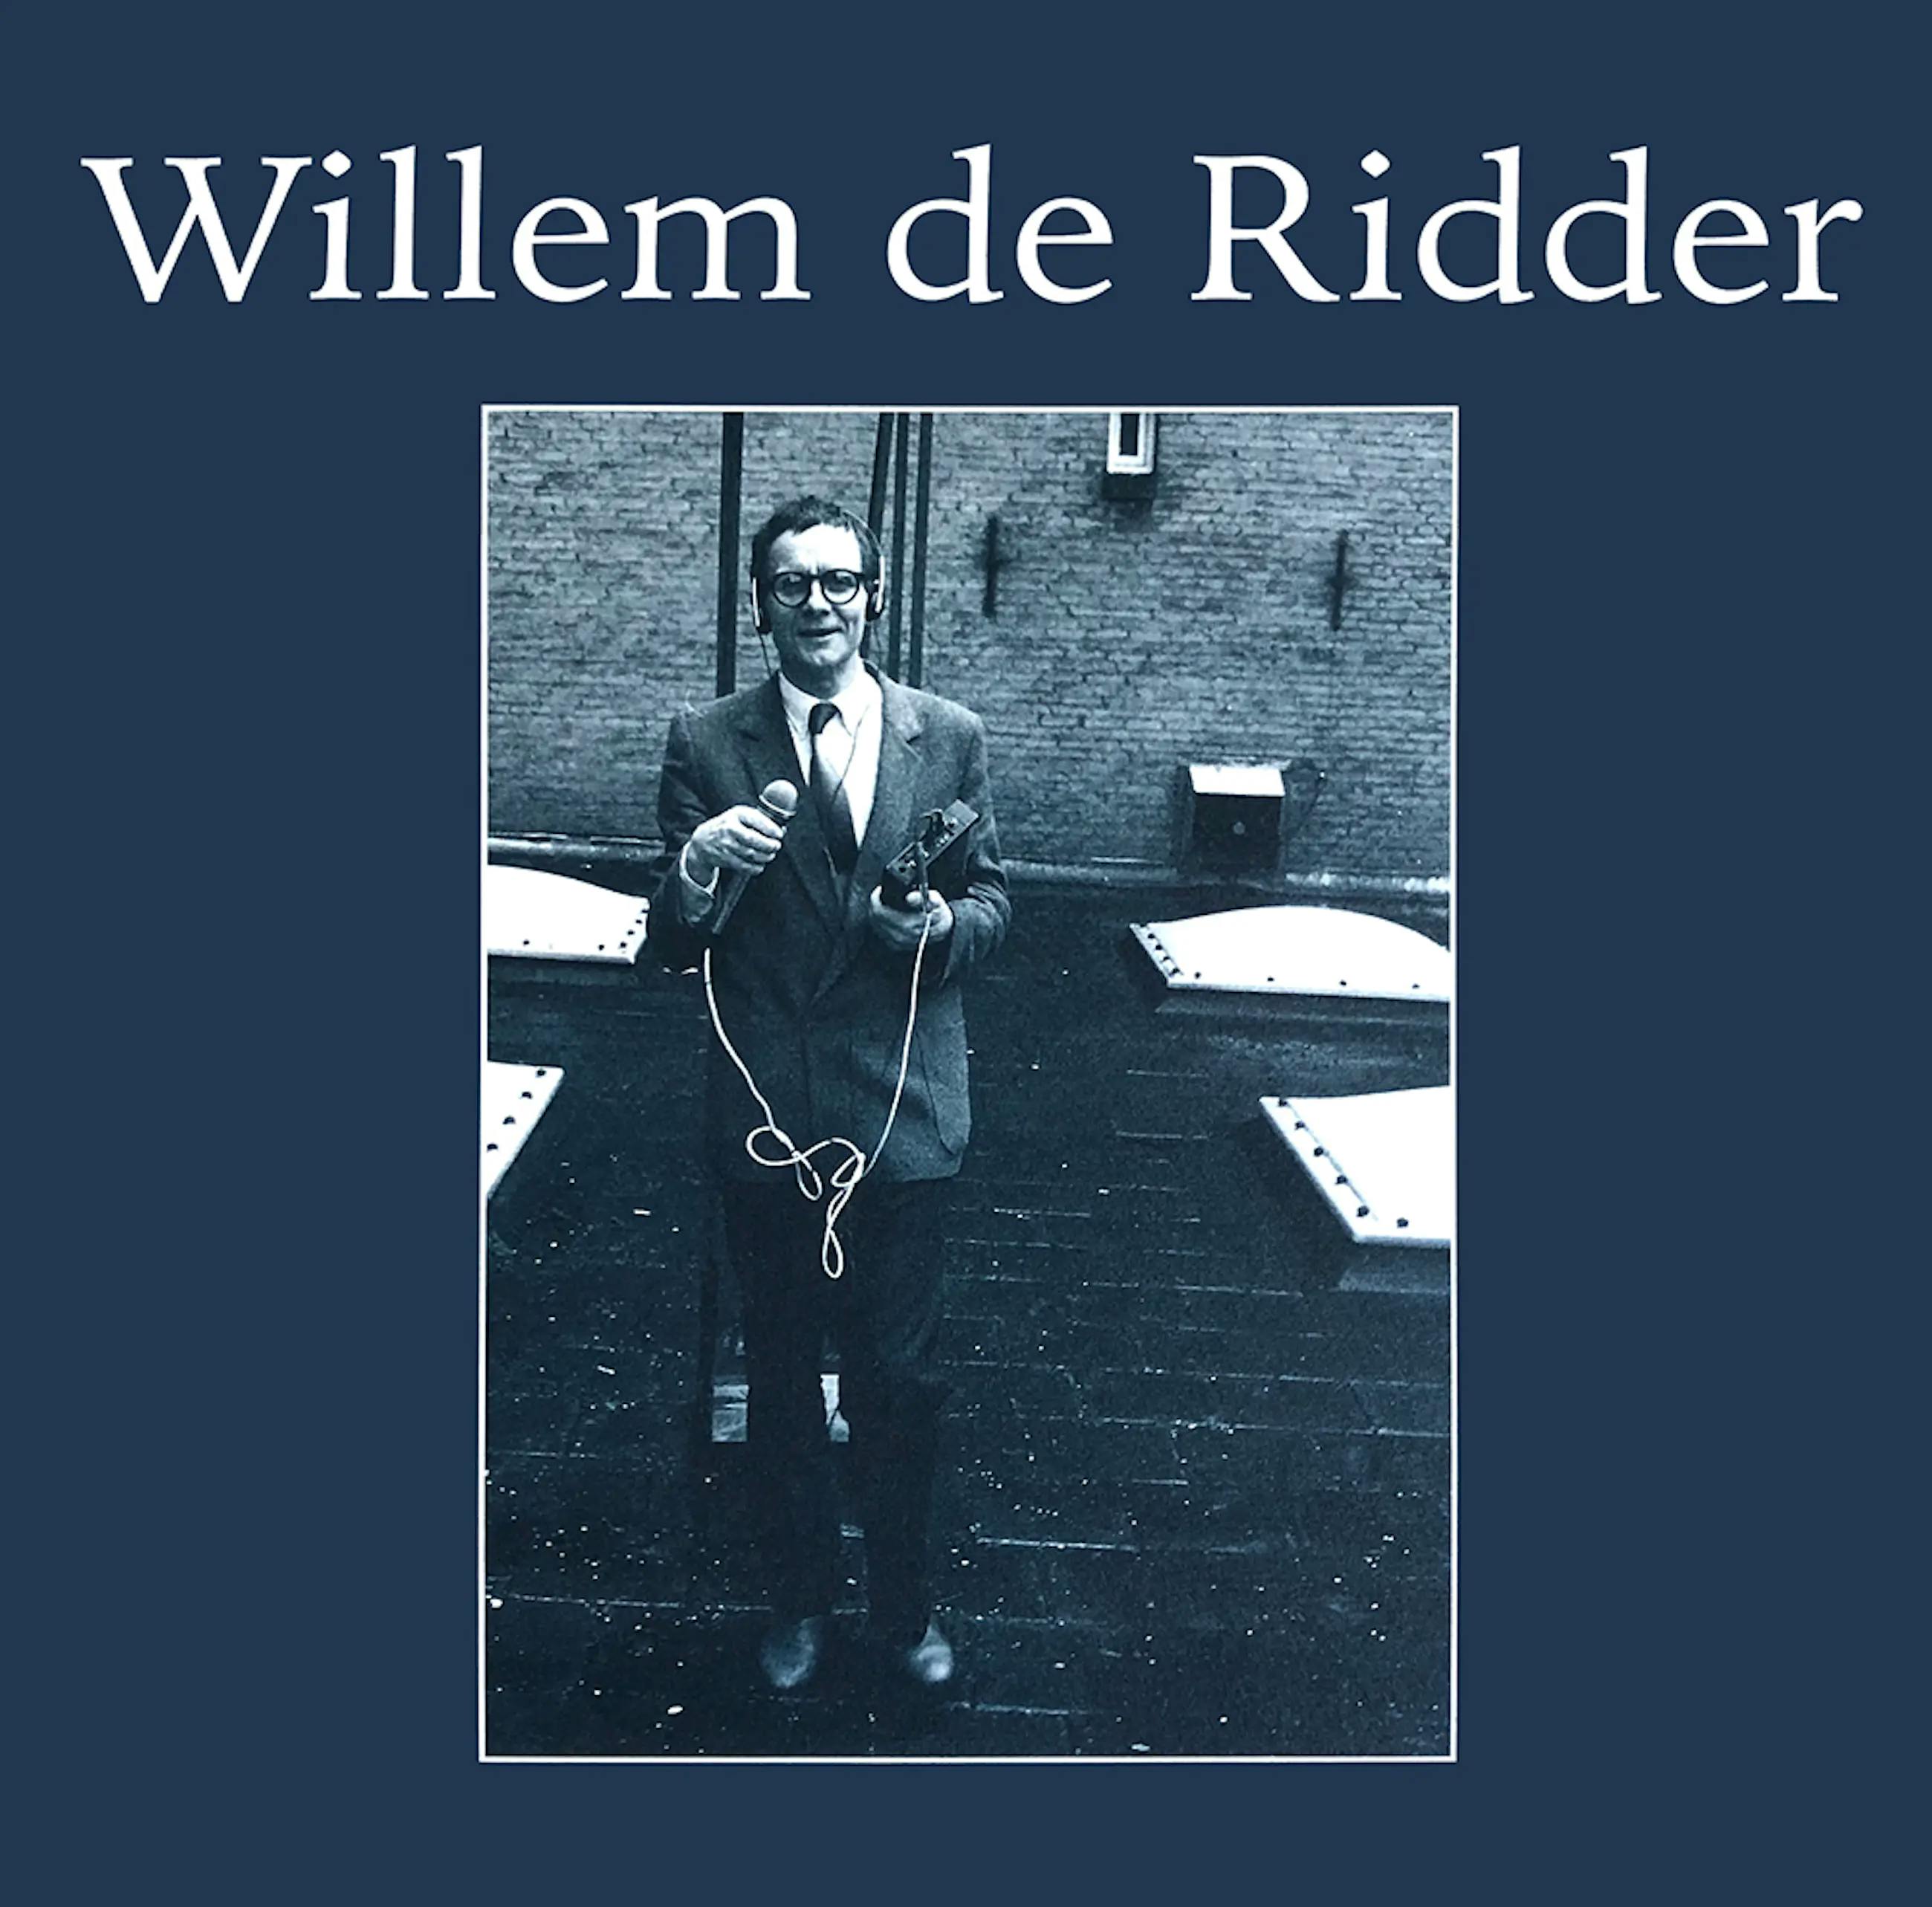 Willem de Ridder - Vinyl - Slowscan editions kopen? Bied vanaf 1!